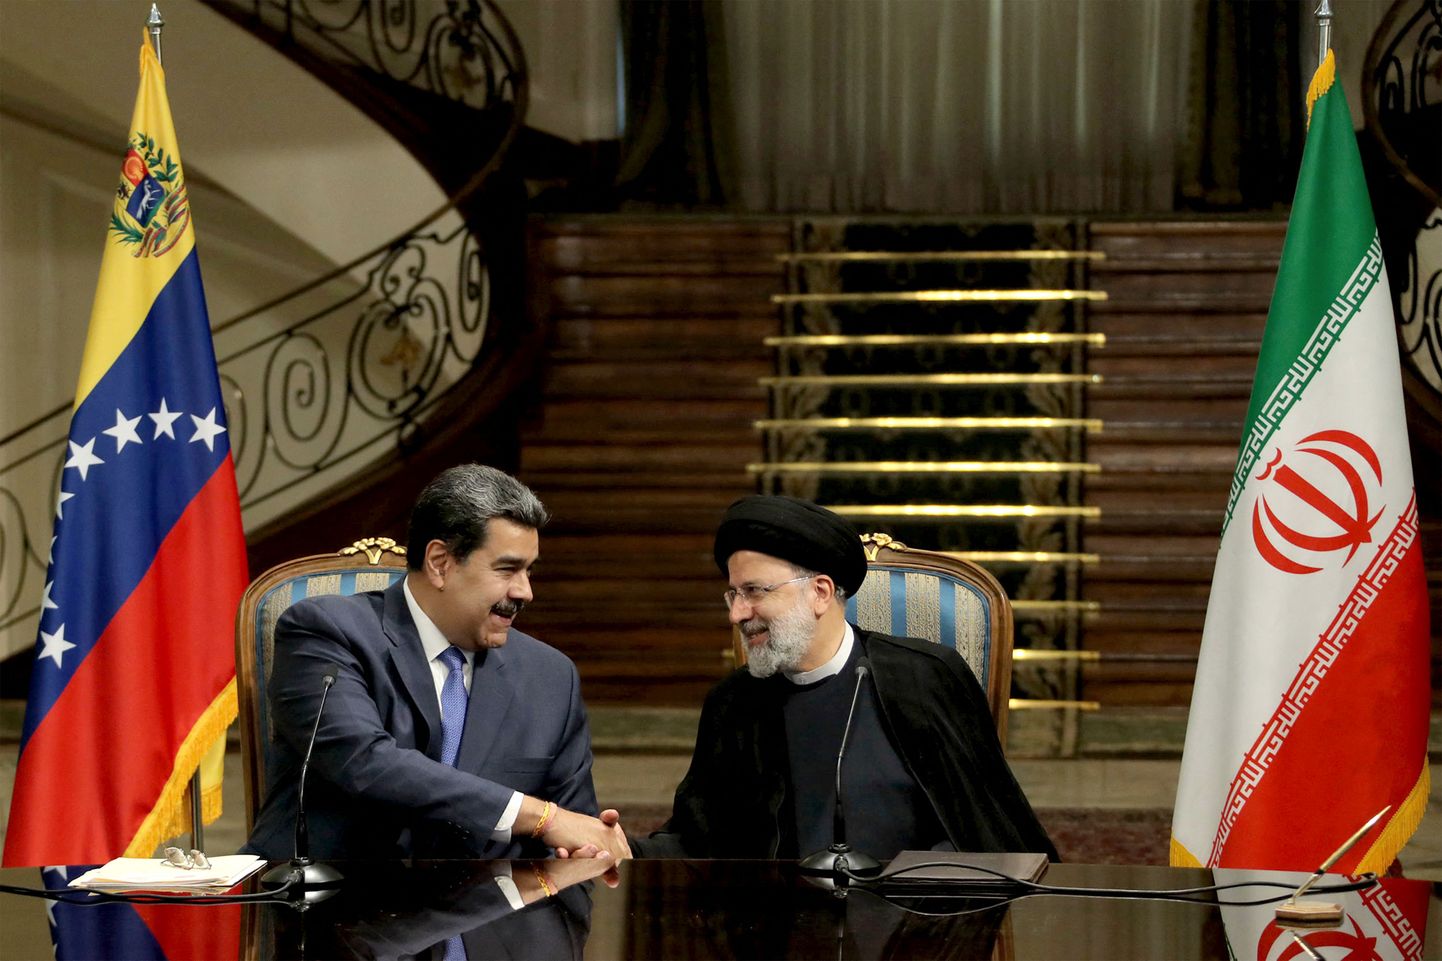 Iraani president Ebrahim Raisi (paremalt) ja Venezuela president Nicolas Maduro kätt surumas.